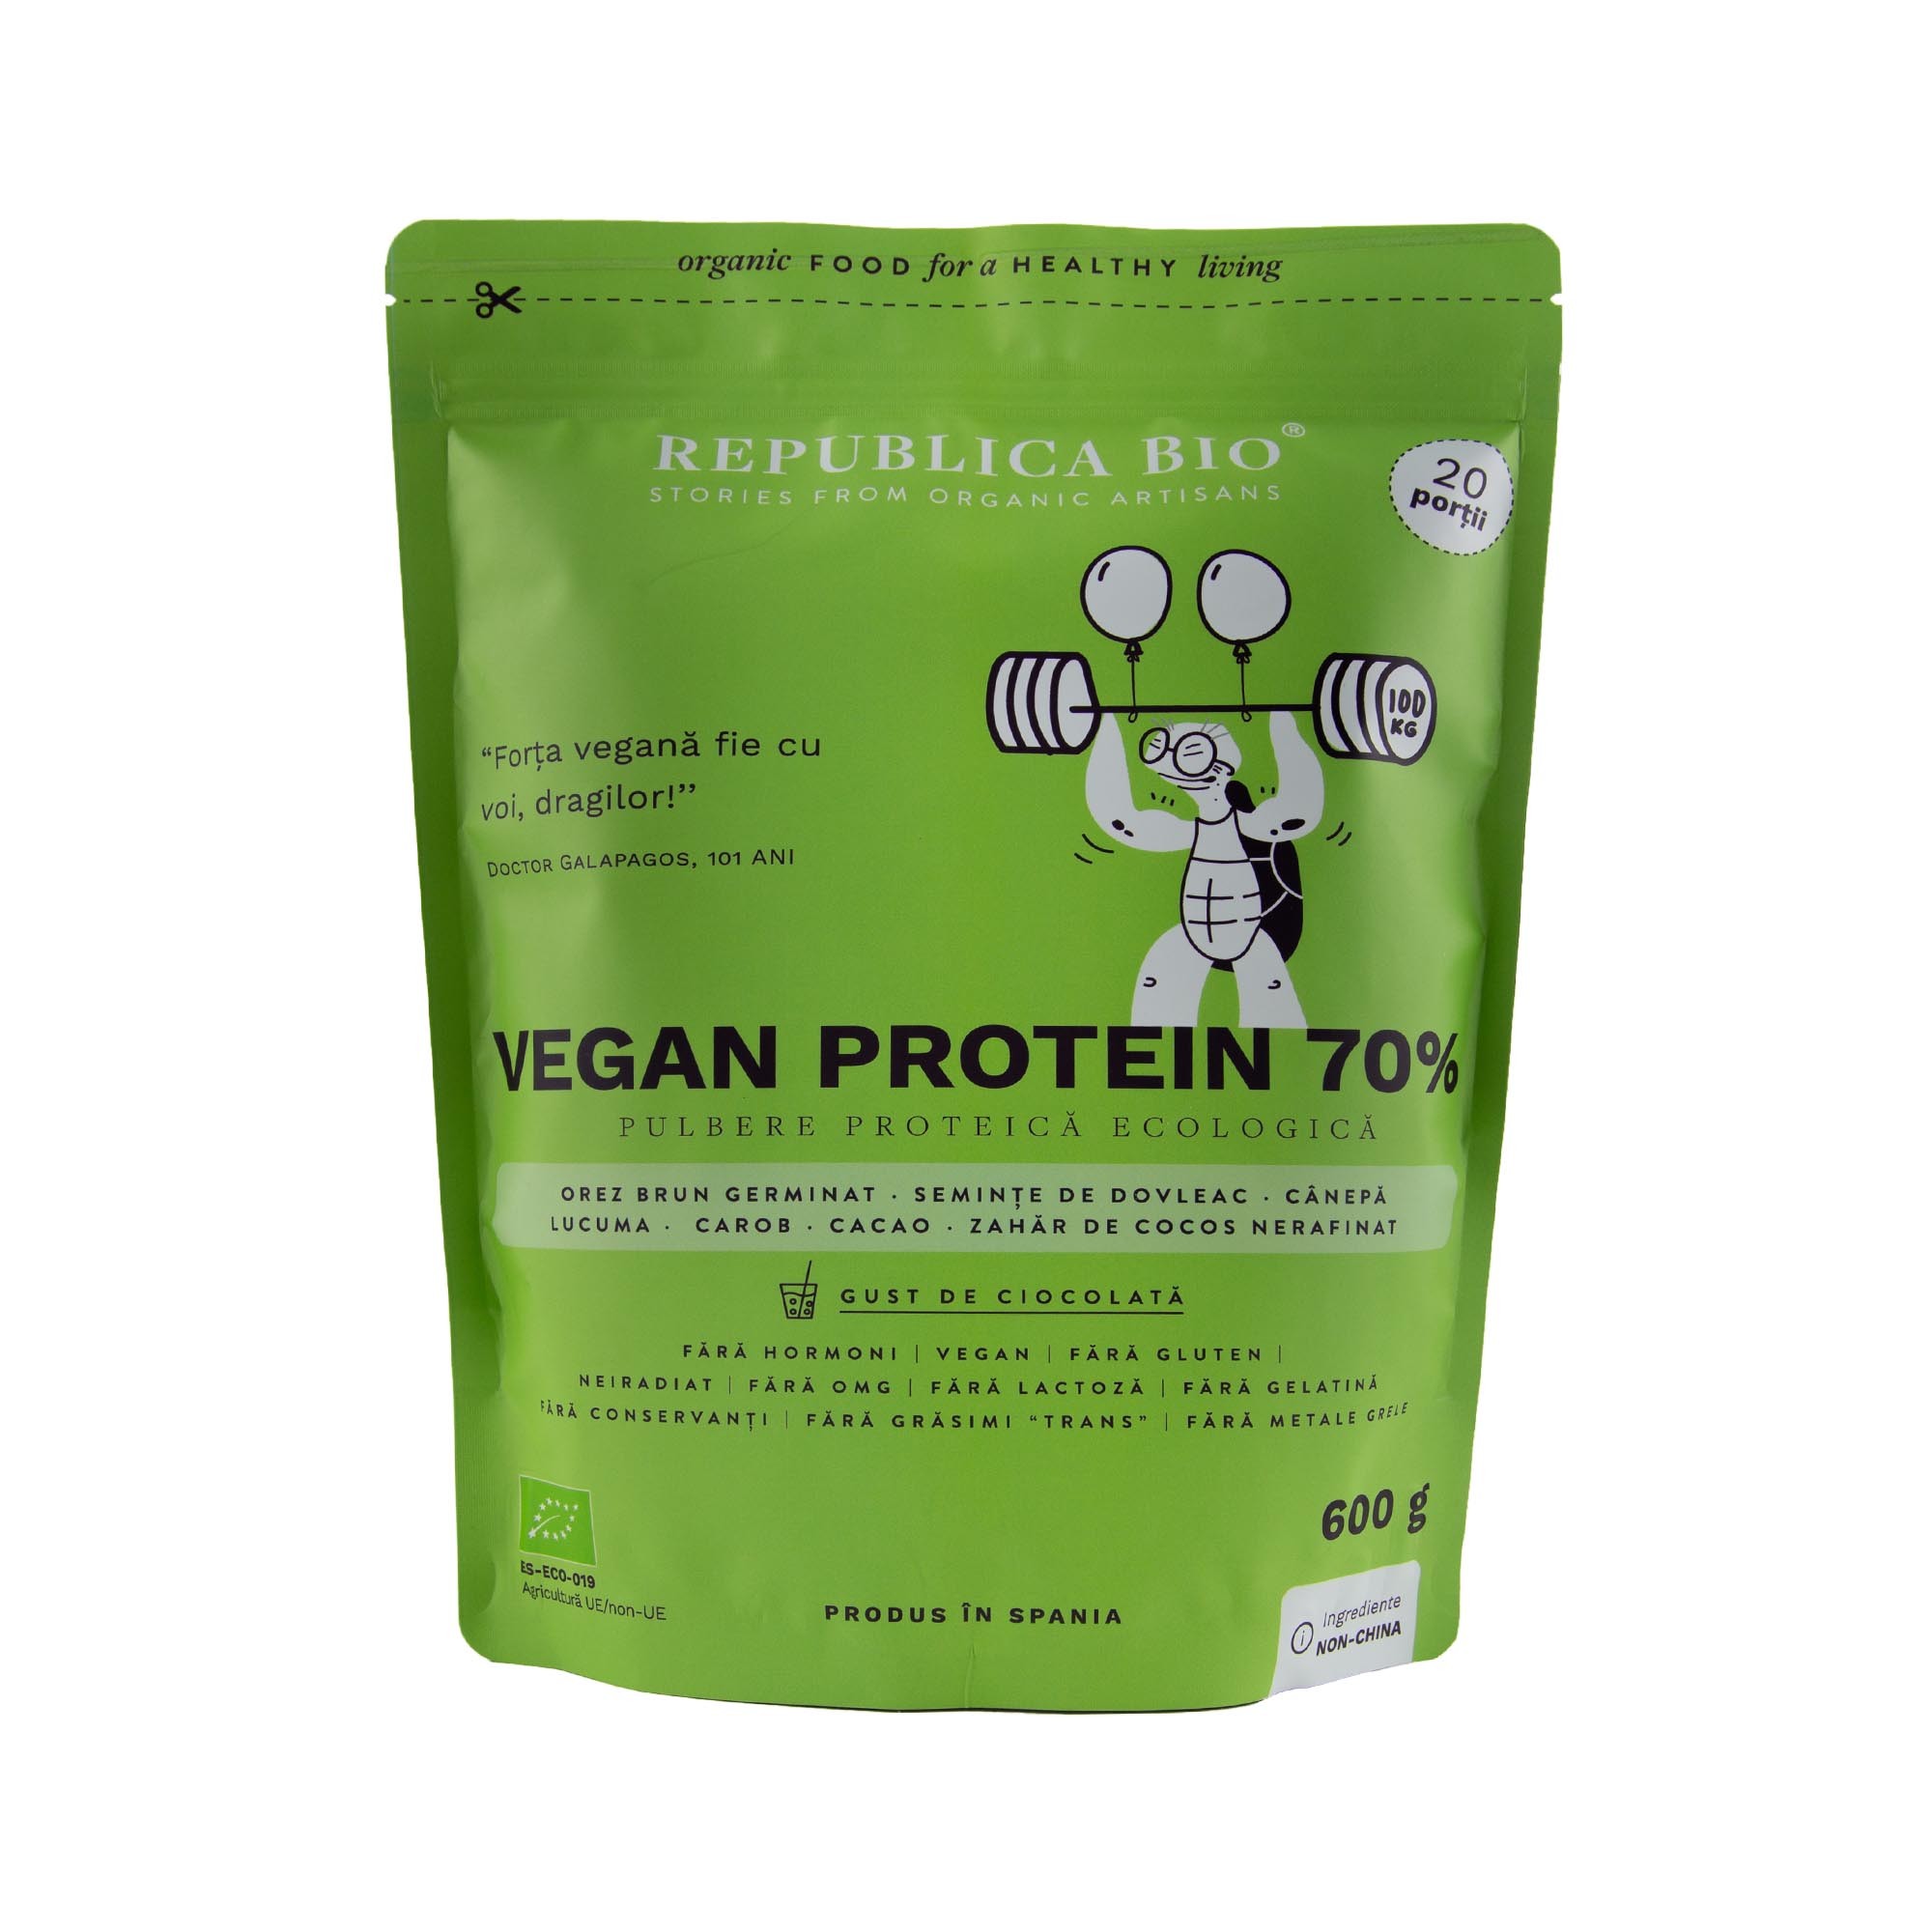 Vegan Protein 70%, Pulbere Functionala Ecologica Republica Bio, 600 G